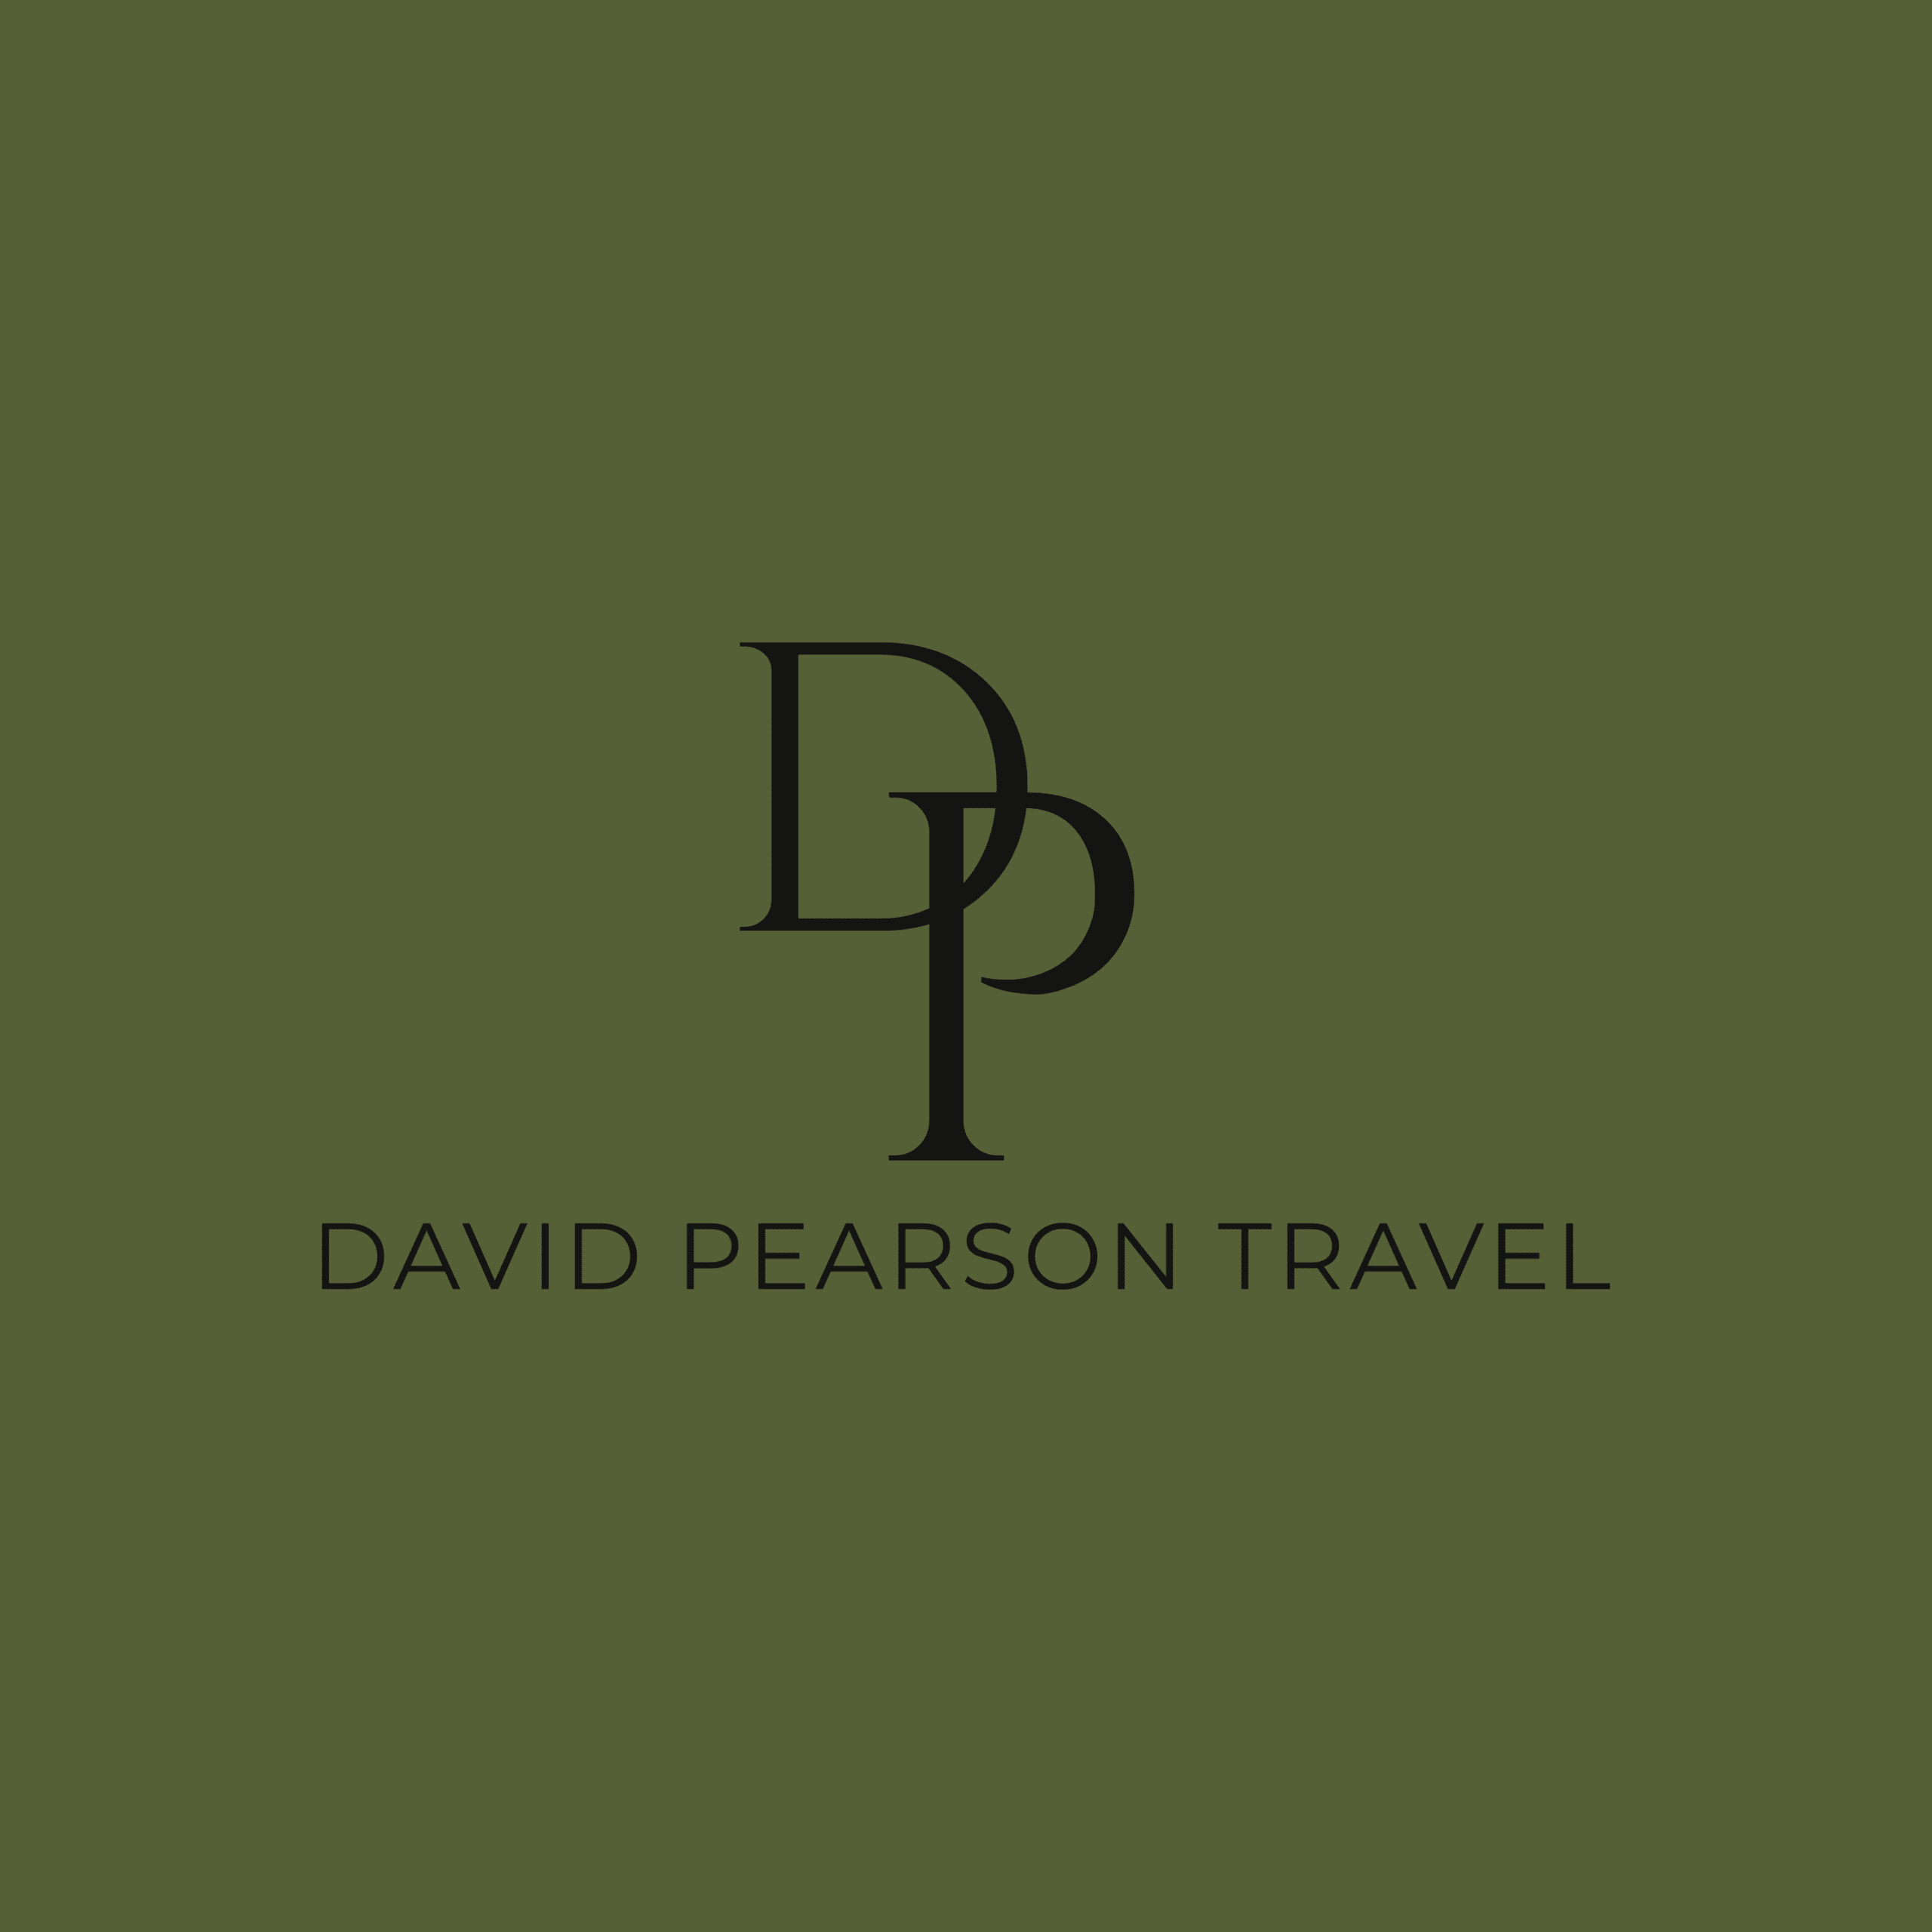 David Pearson Travel